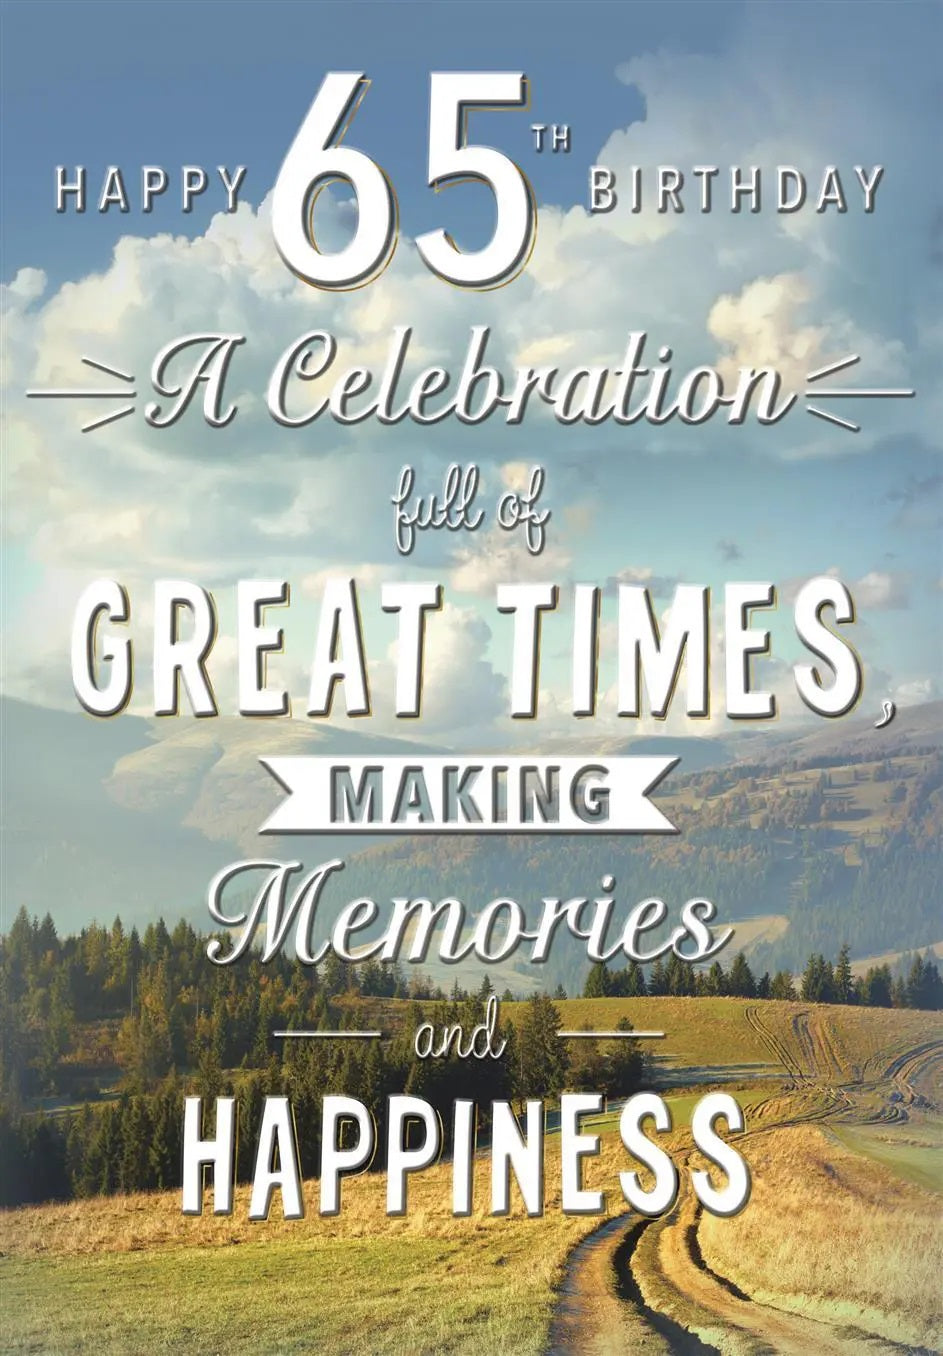 65th Birthday Card - Memorable Celebrations